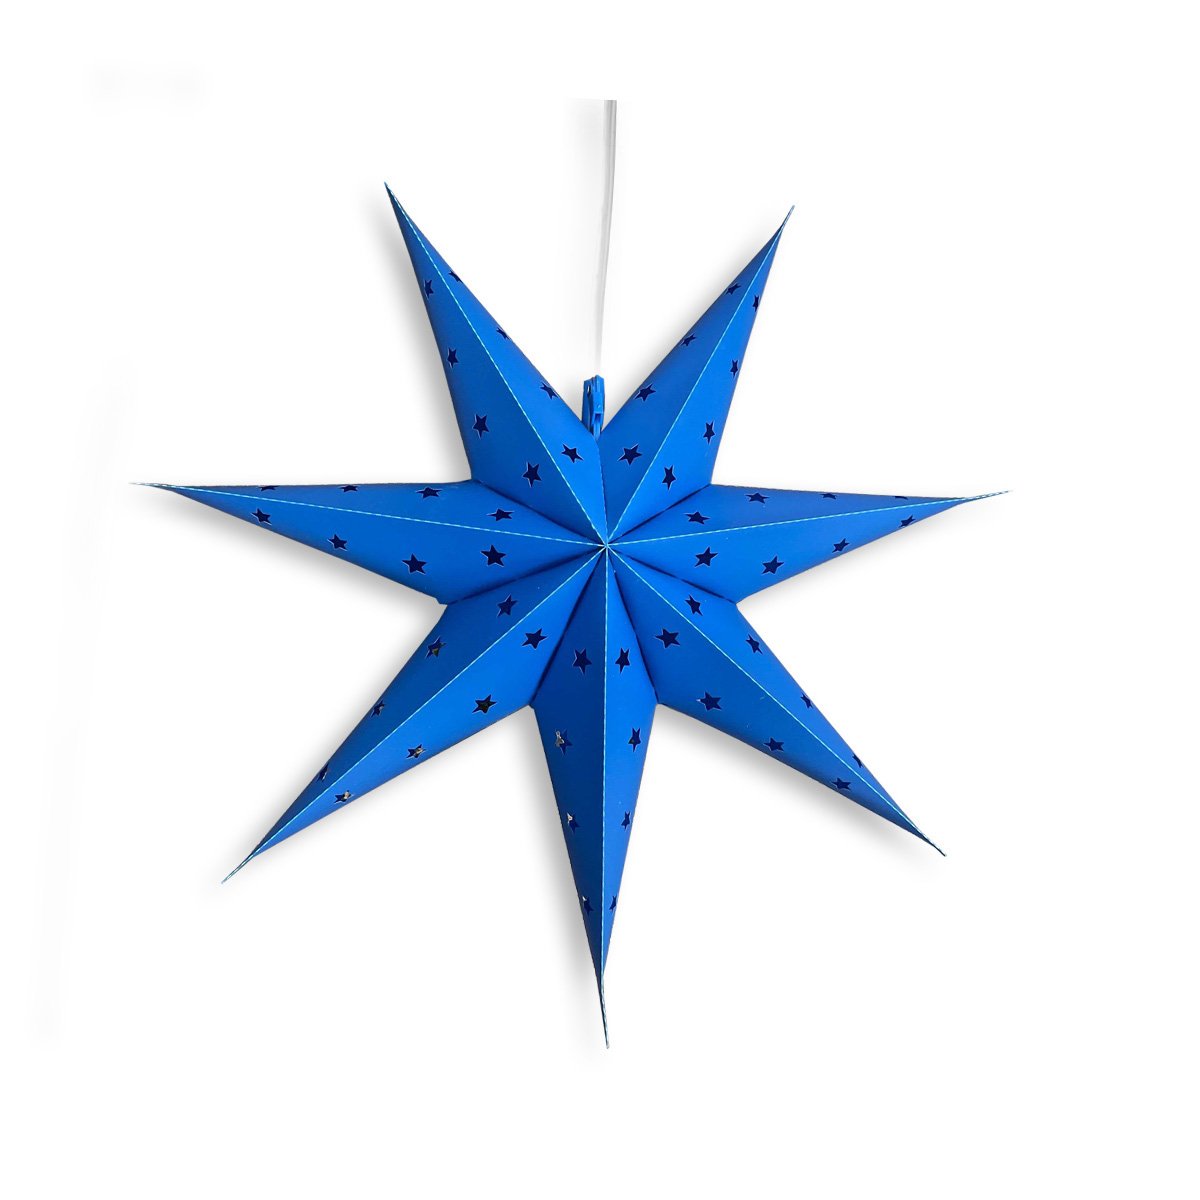 24" Dark Blue 7-Point Weatherproof Star Lantern Lamp, Hanging Decoration (Shade Only)